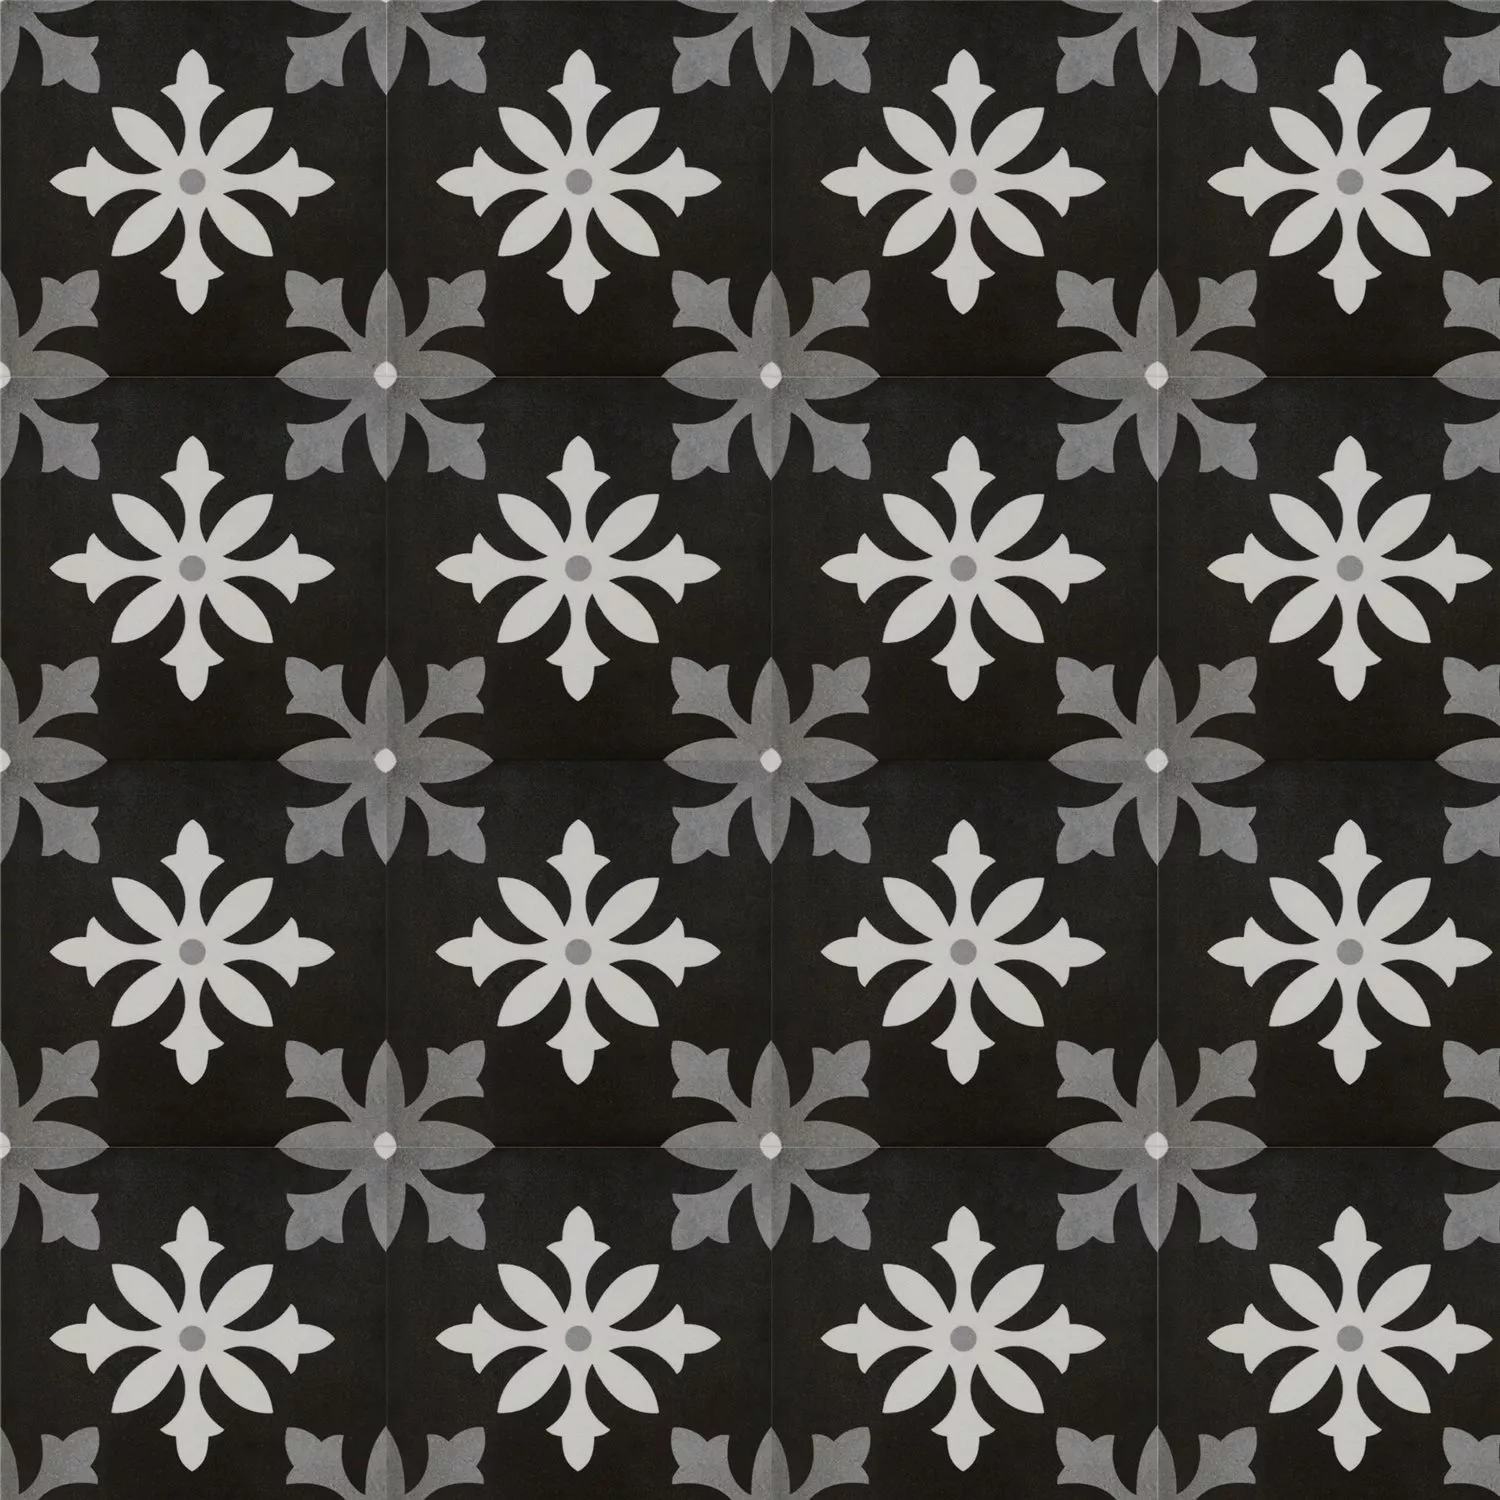 Pločice Imitacija Cementa Gotik Tacca 22,3x22,3cm